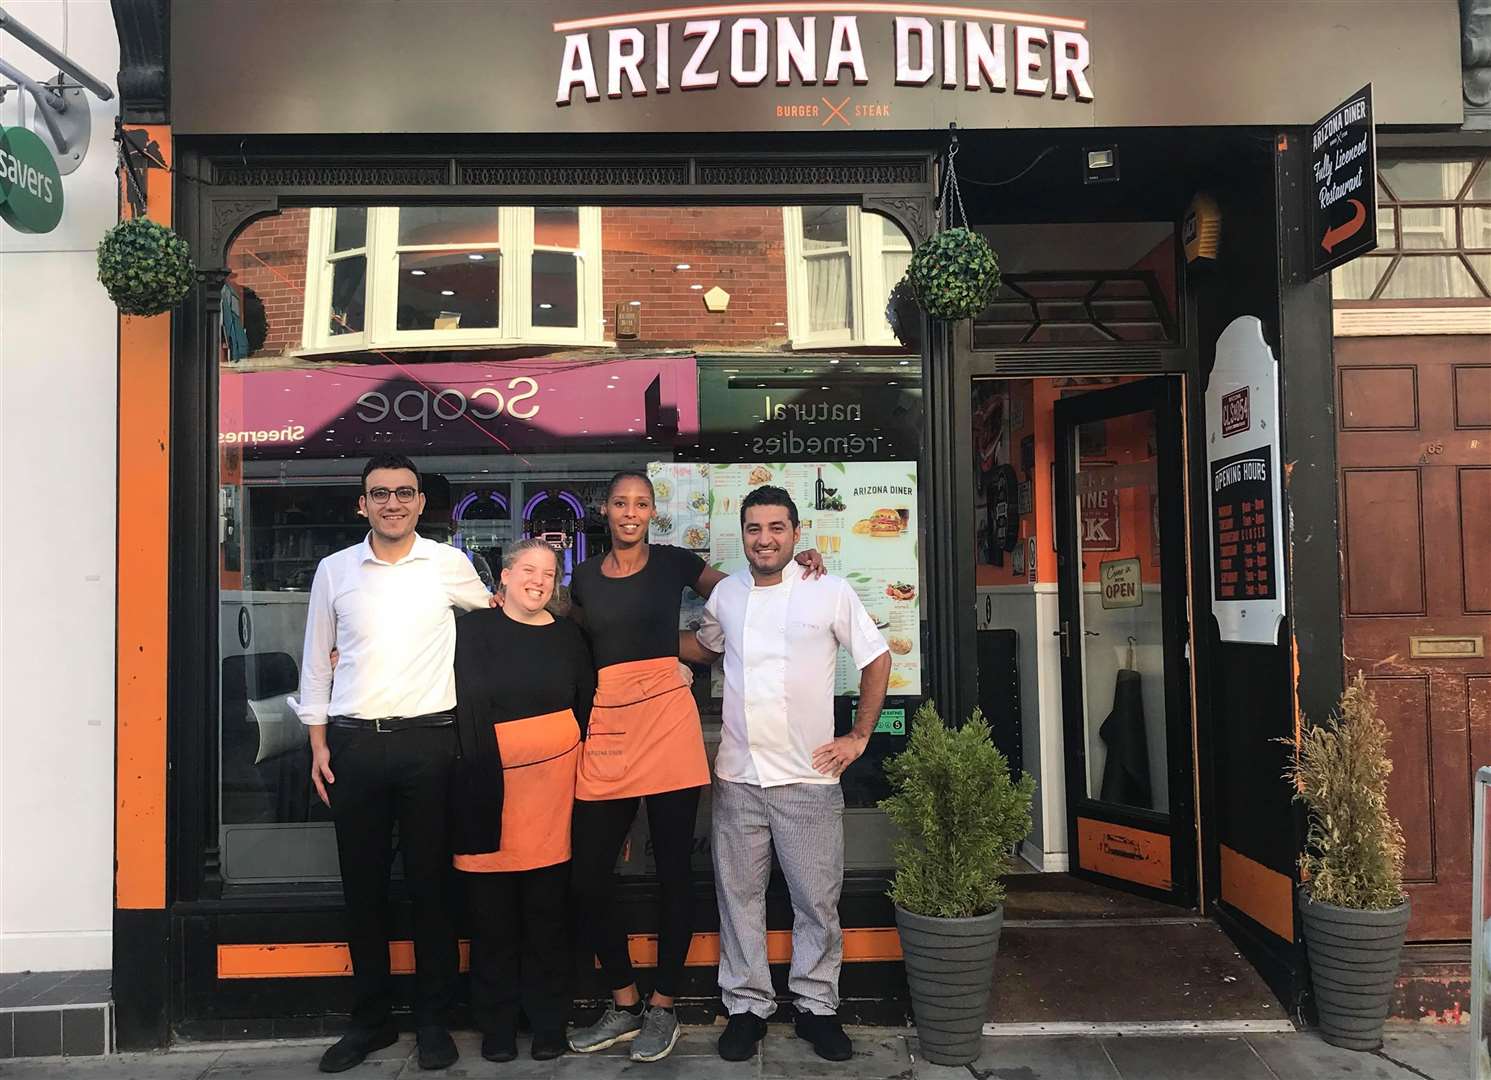 Abuzer Kartal, Charlotte Springate, and Heather Anderson with owner Muzo Tasdogan at Arizona Diner